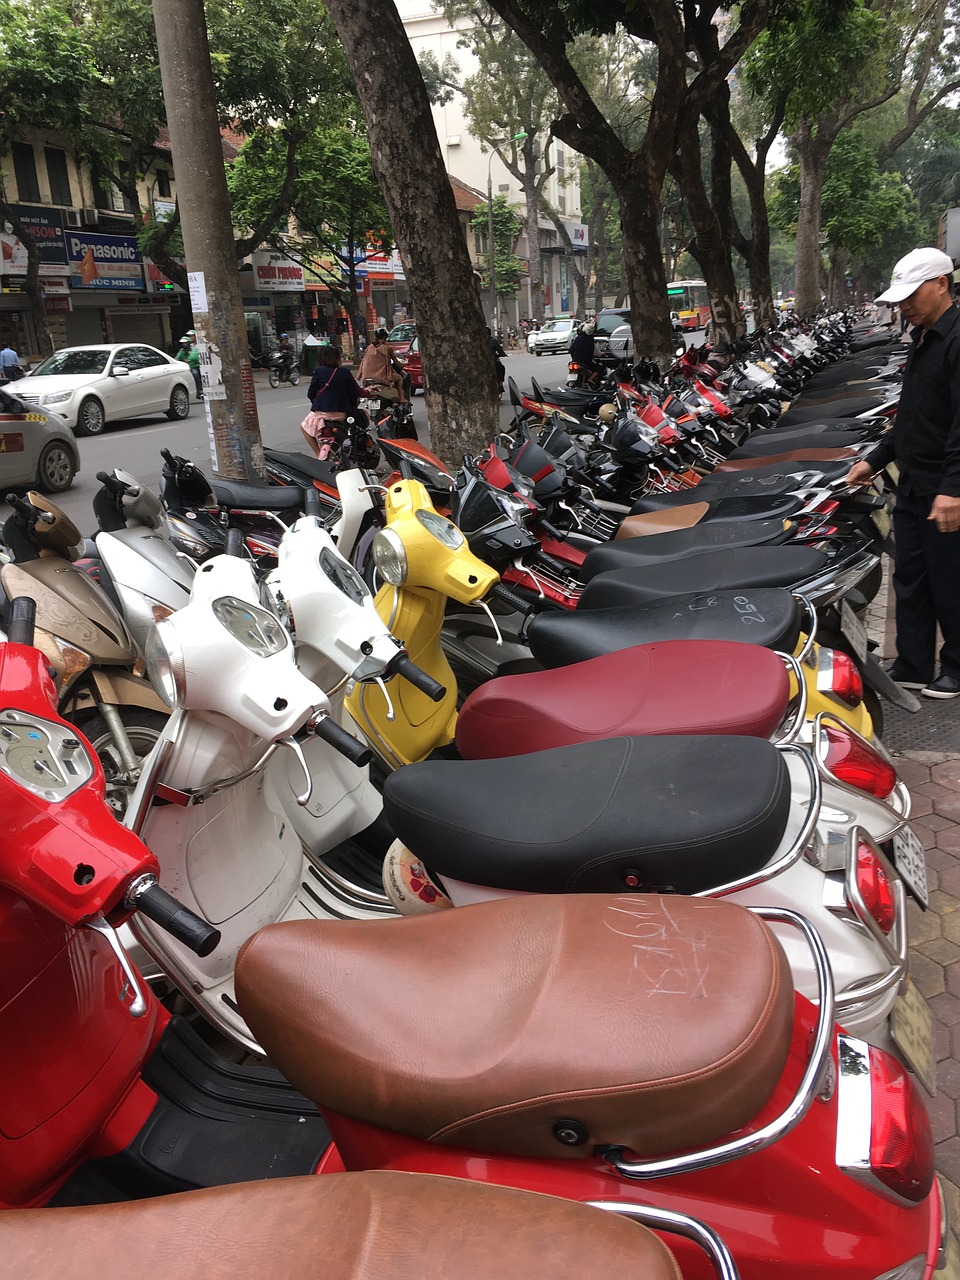 mopeds vietnam scooter free photo